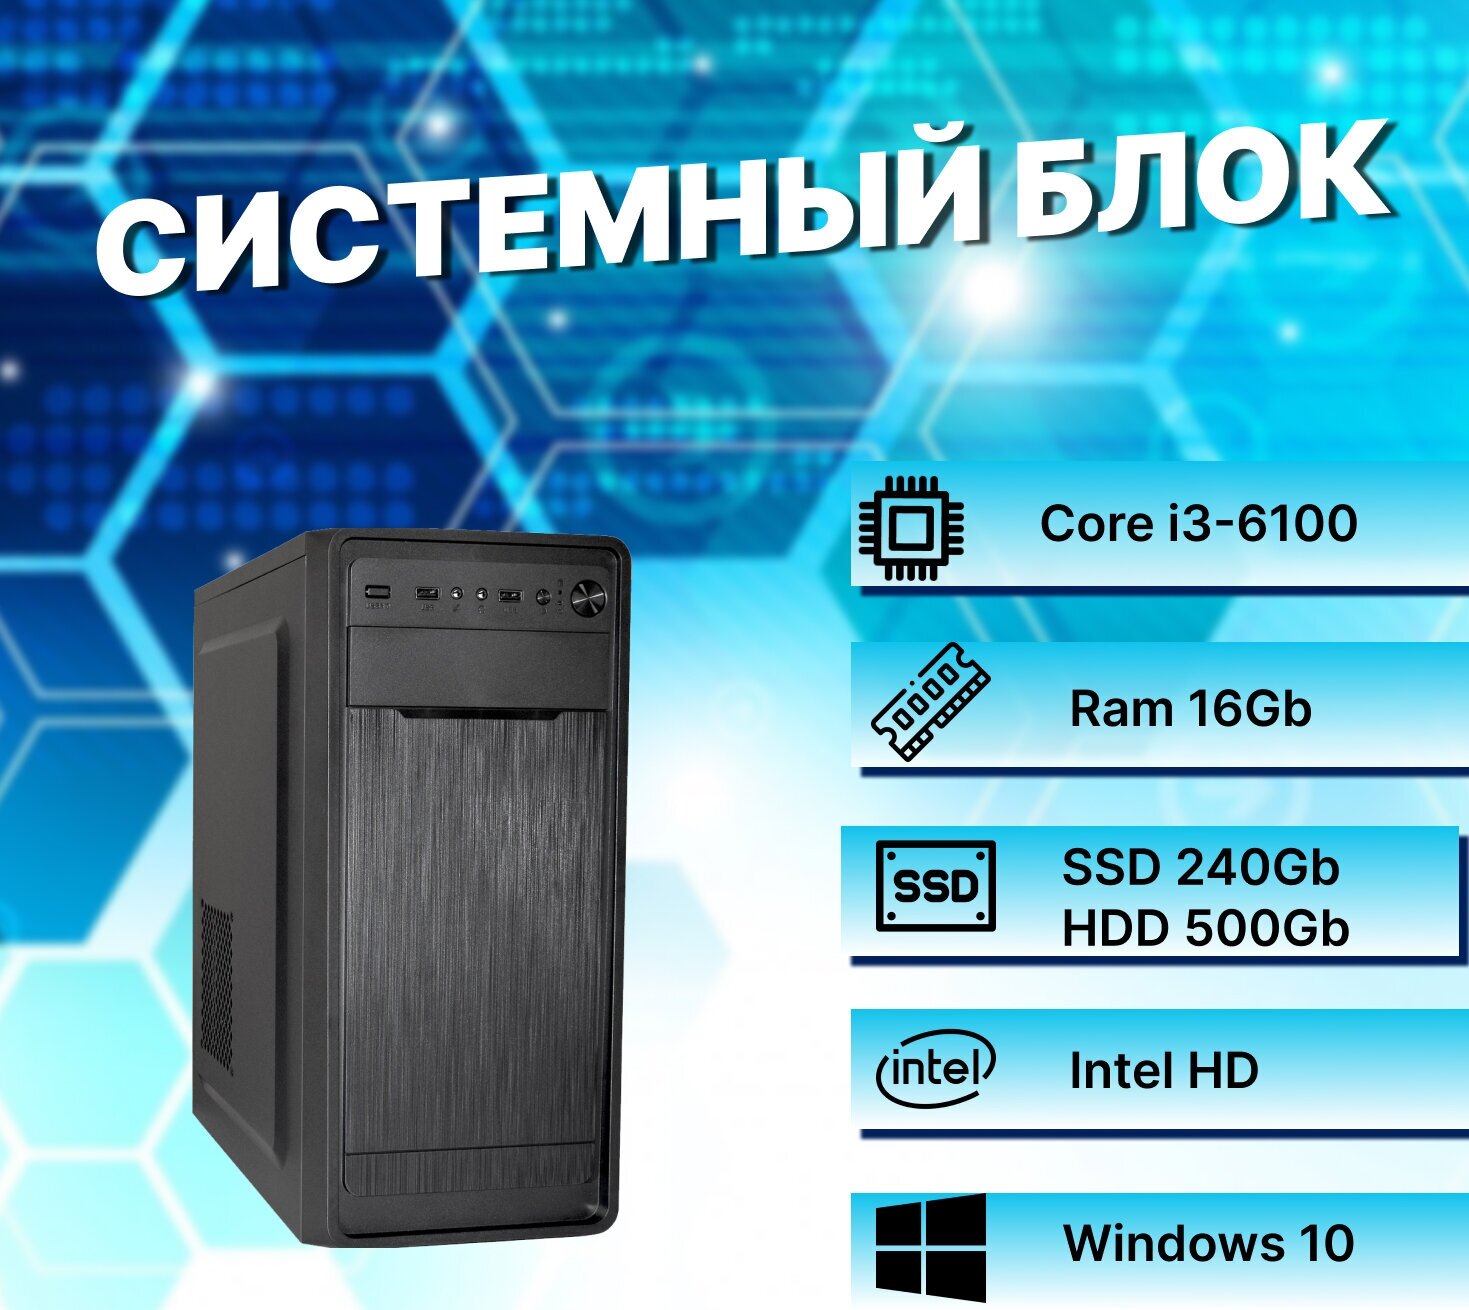 Системный блок Intel Core I3-6100 (3.7ГГц)/ RAM 16Gb/ SSD 240Gb/ HDD 500Gb/ Intel HD/ Windows 10 Pro